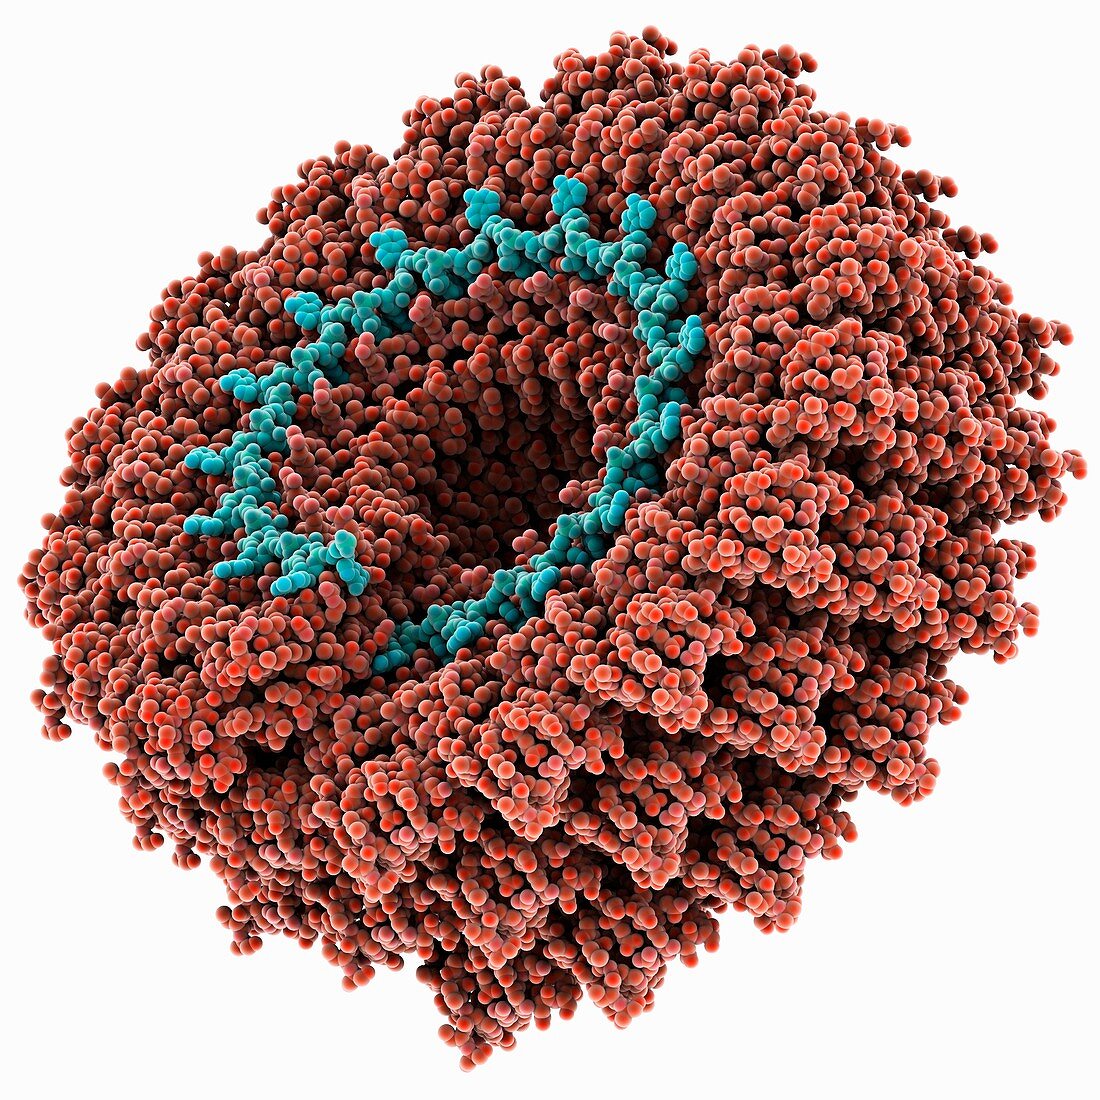 Tobacco mosaic virus,molecular model